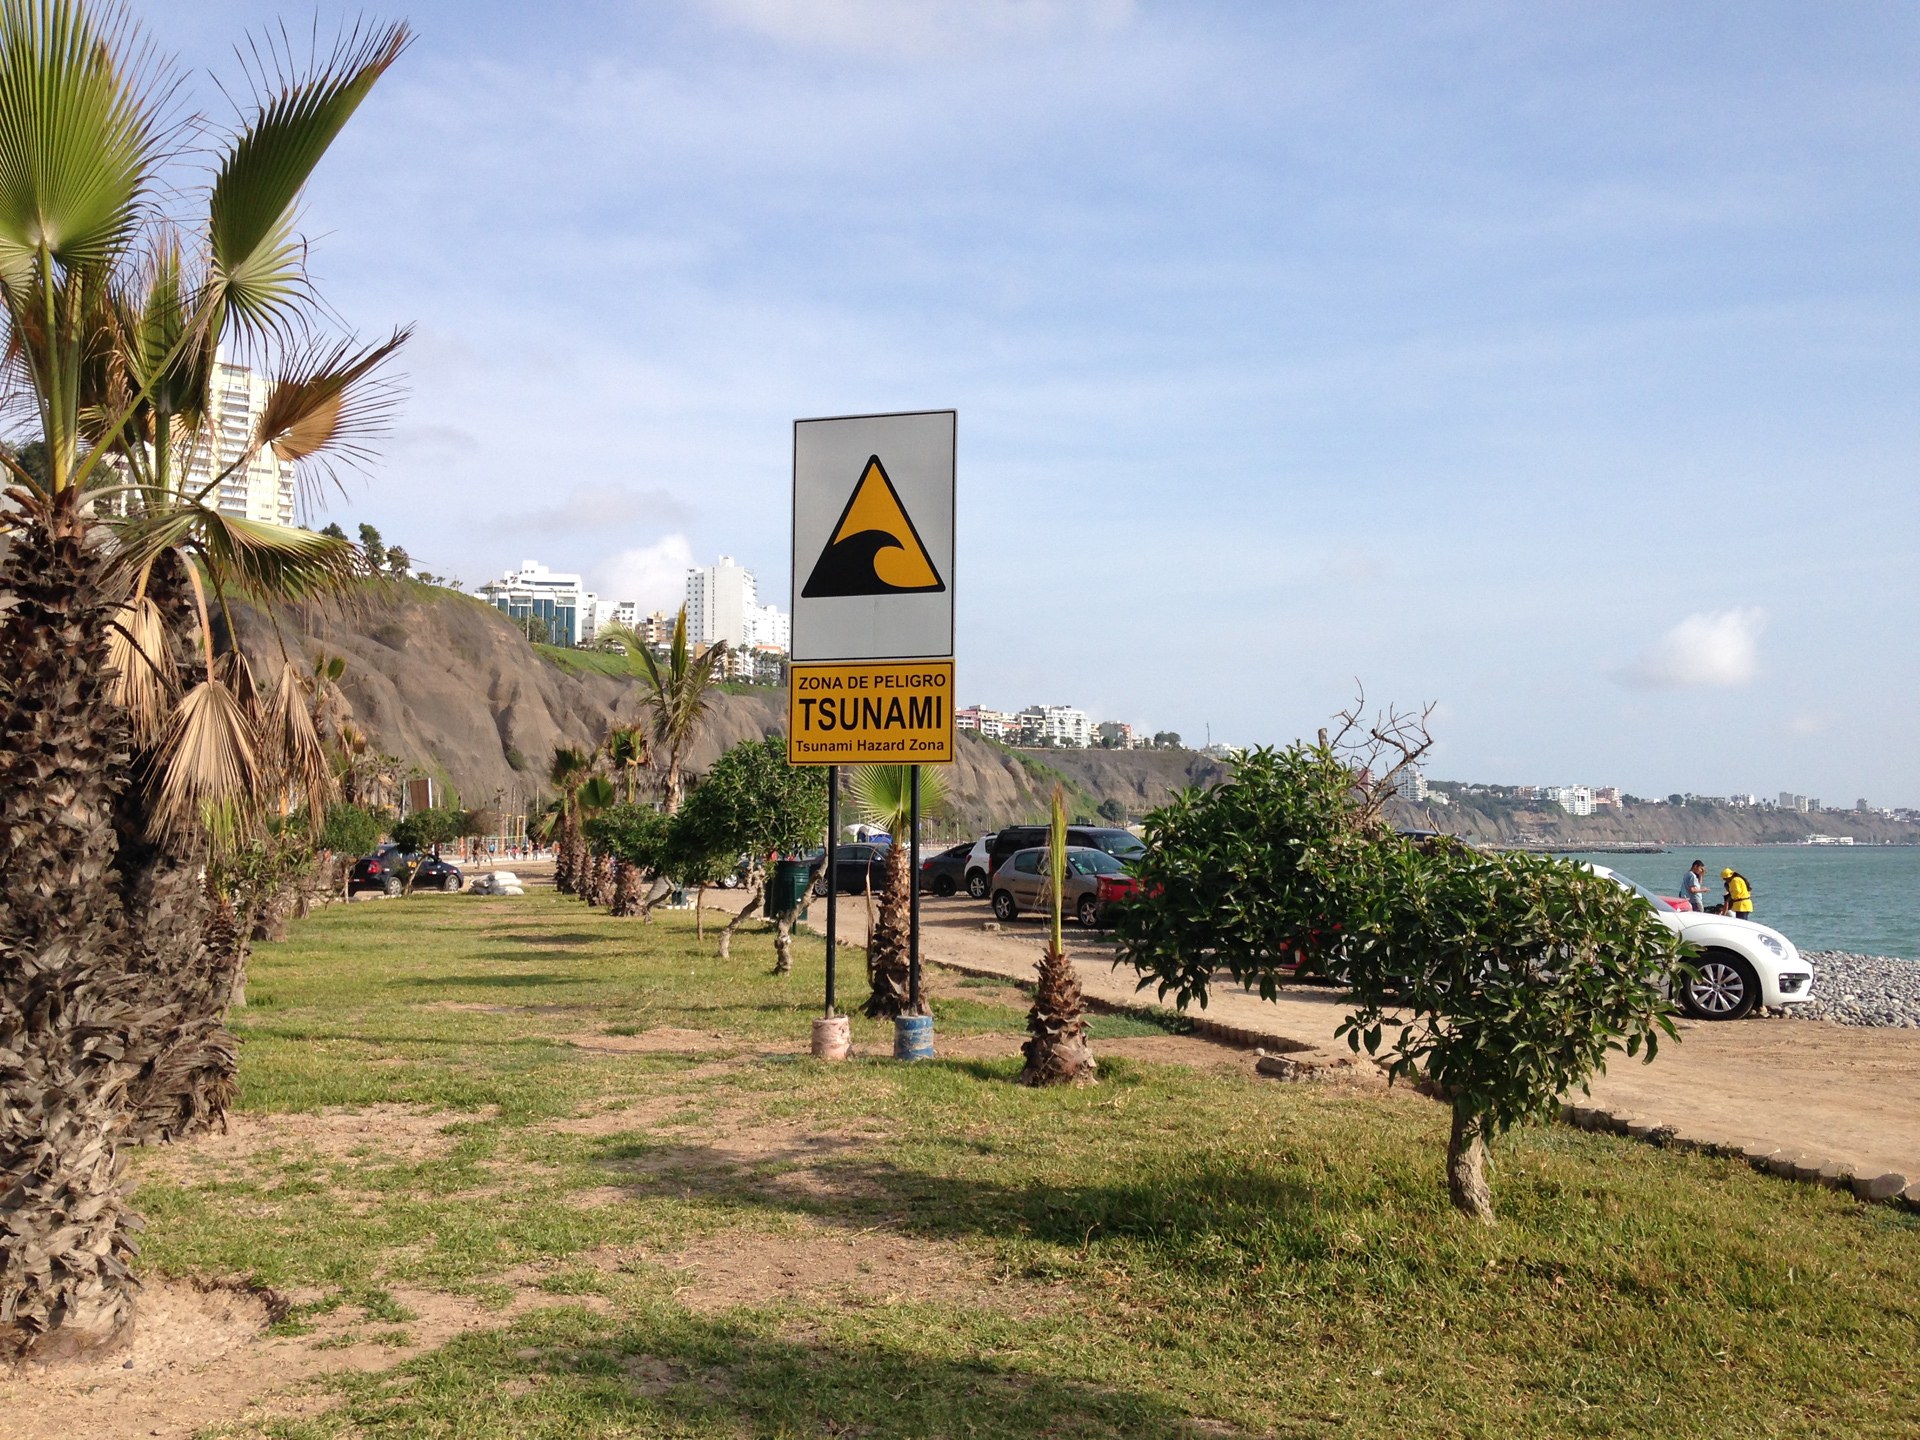 Tsunami warning sign on the coast near Lima, Peru